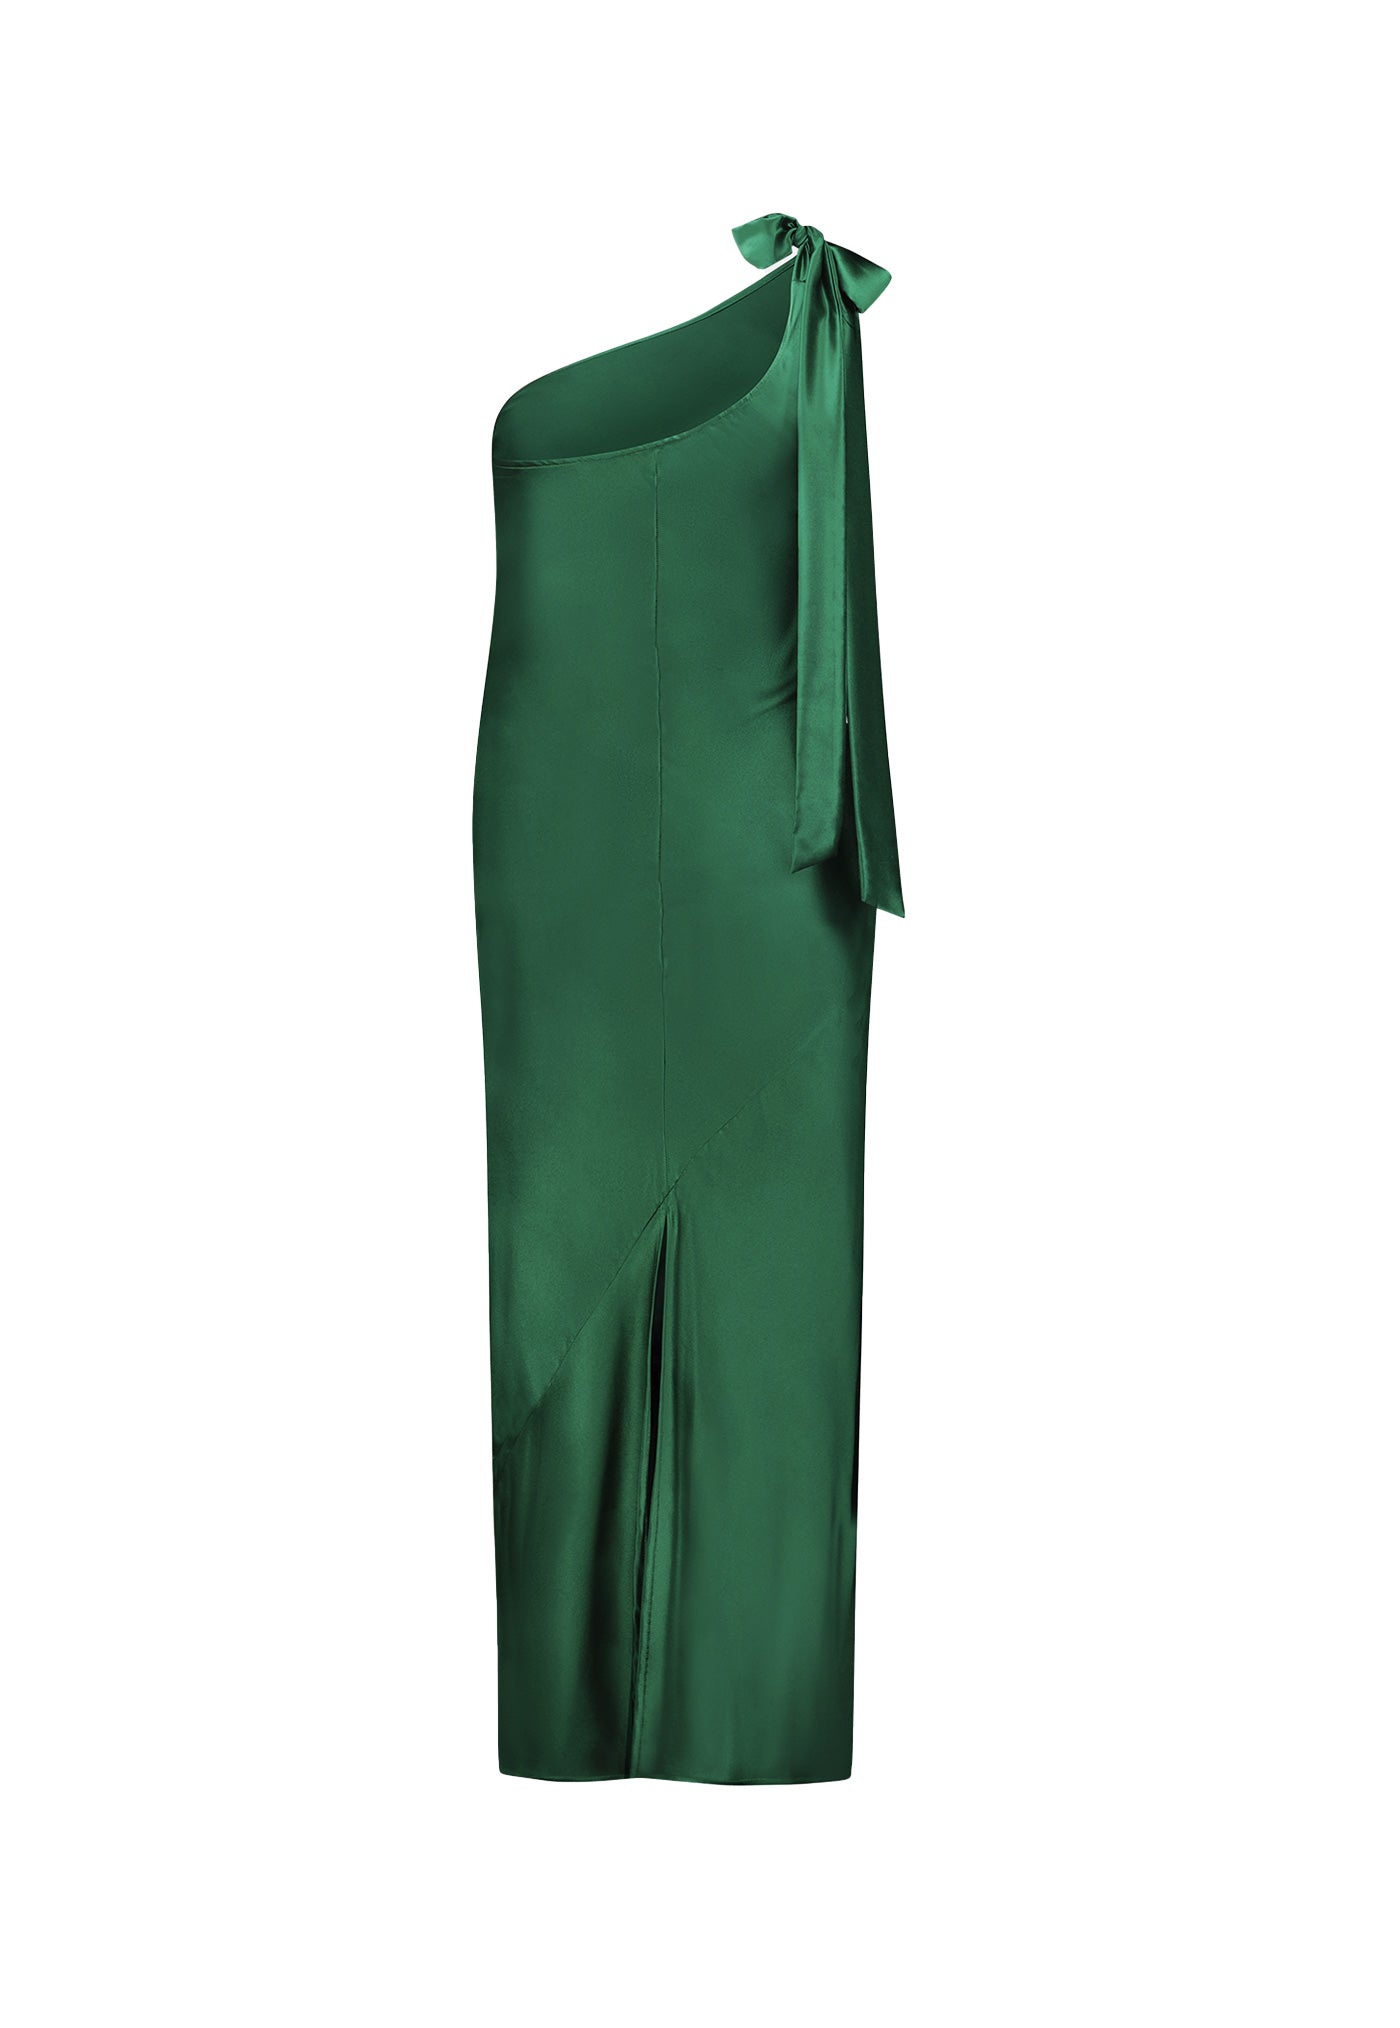 One Shoulder Wilmer Dress - Emerald Green sold by Angel Divine